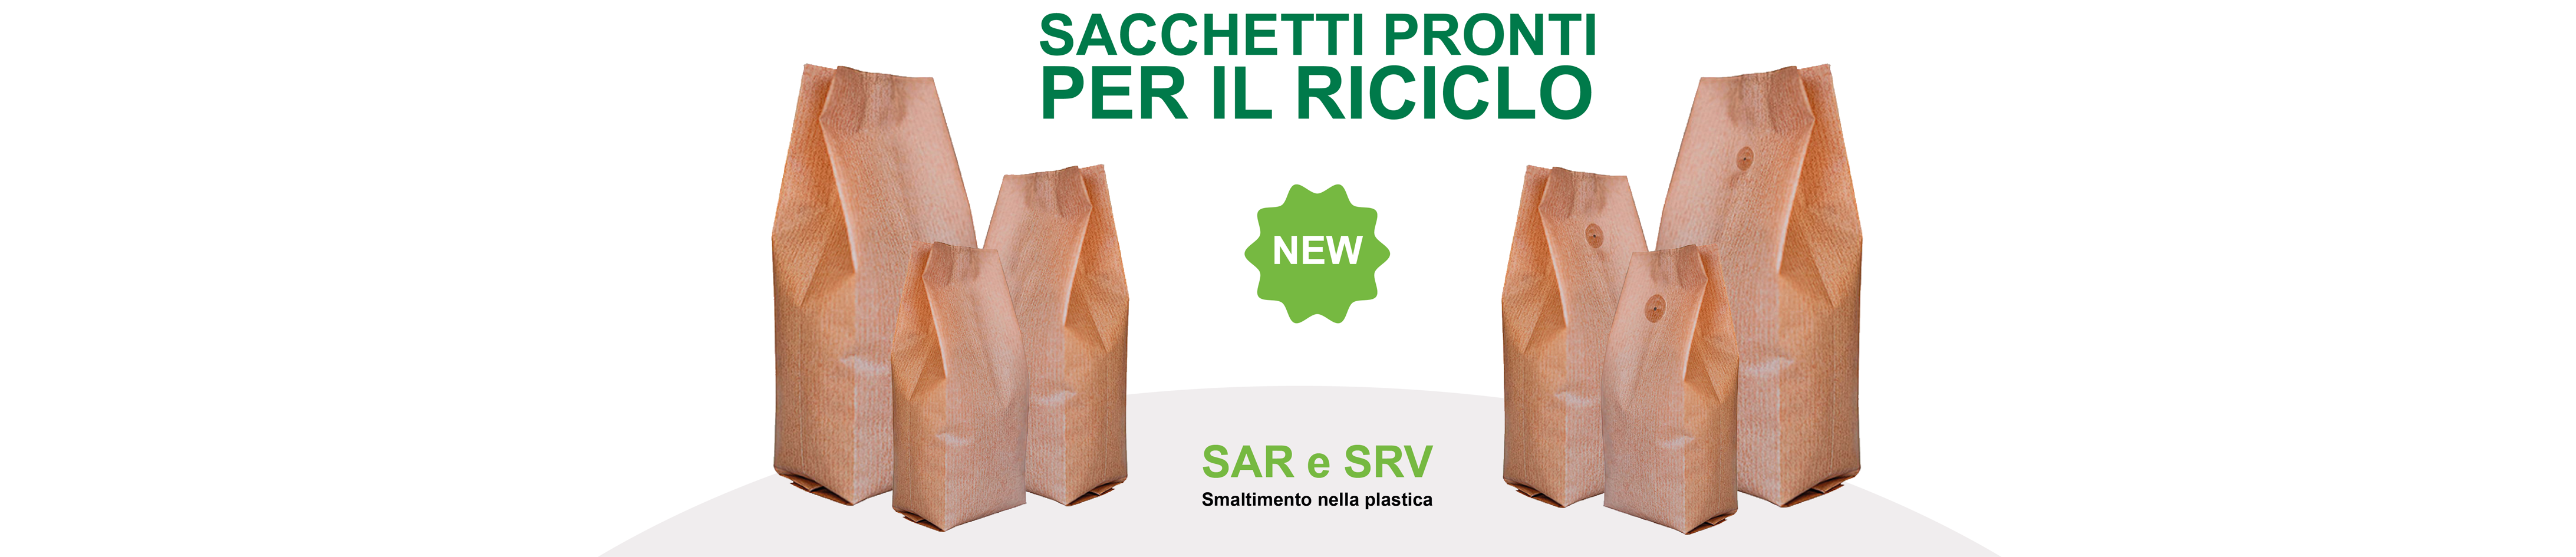 sacchetti_riciclabili.png